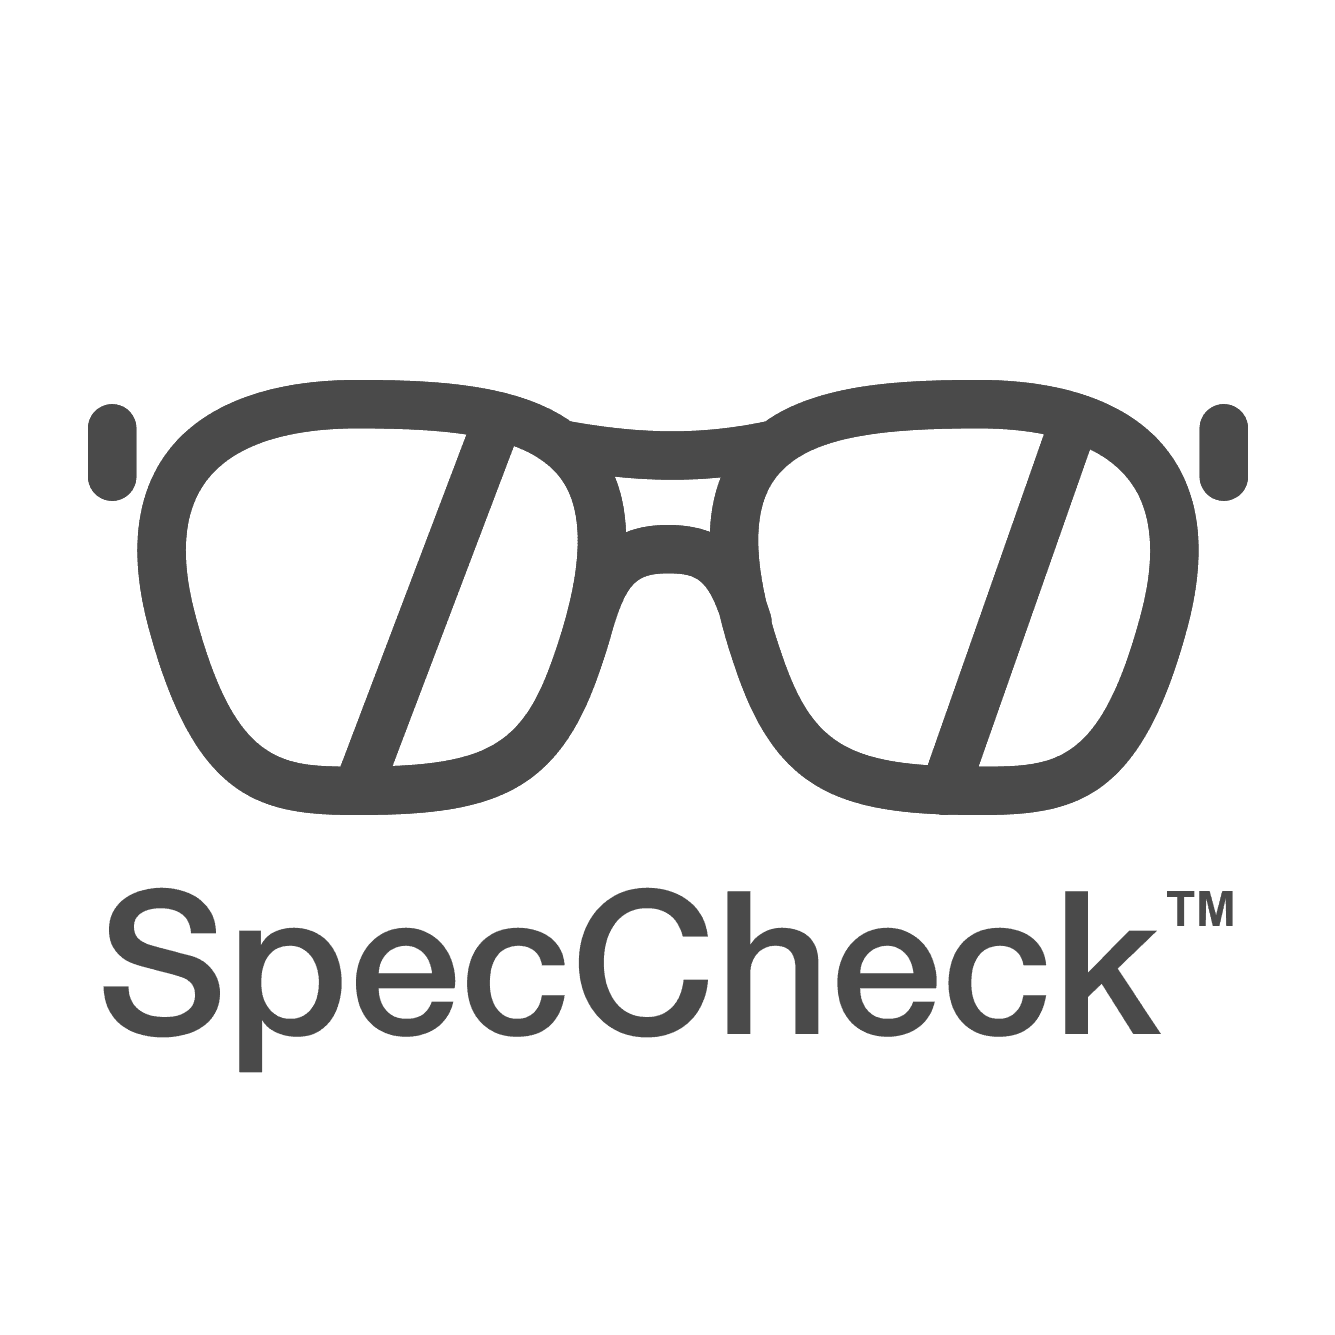 Speccheck logo.png